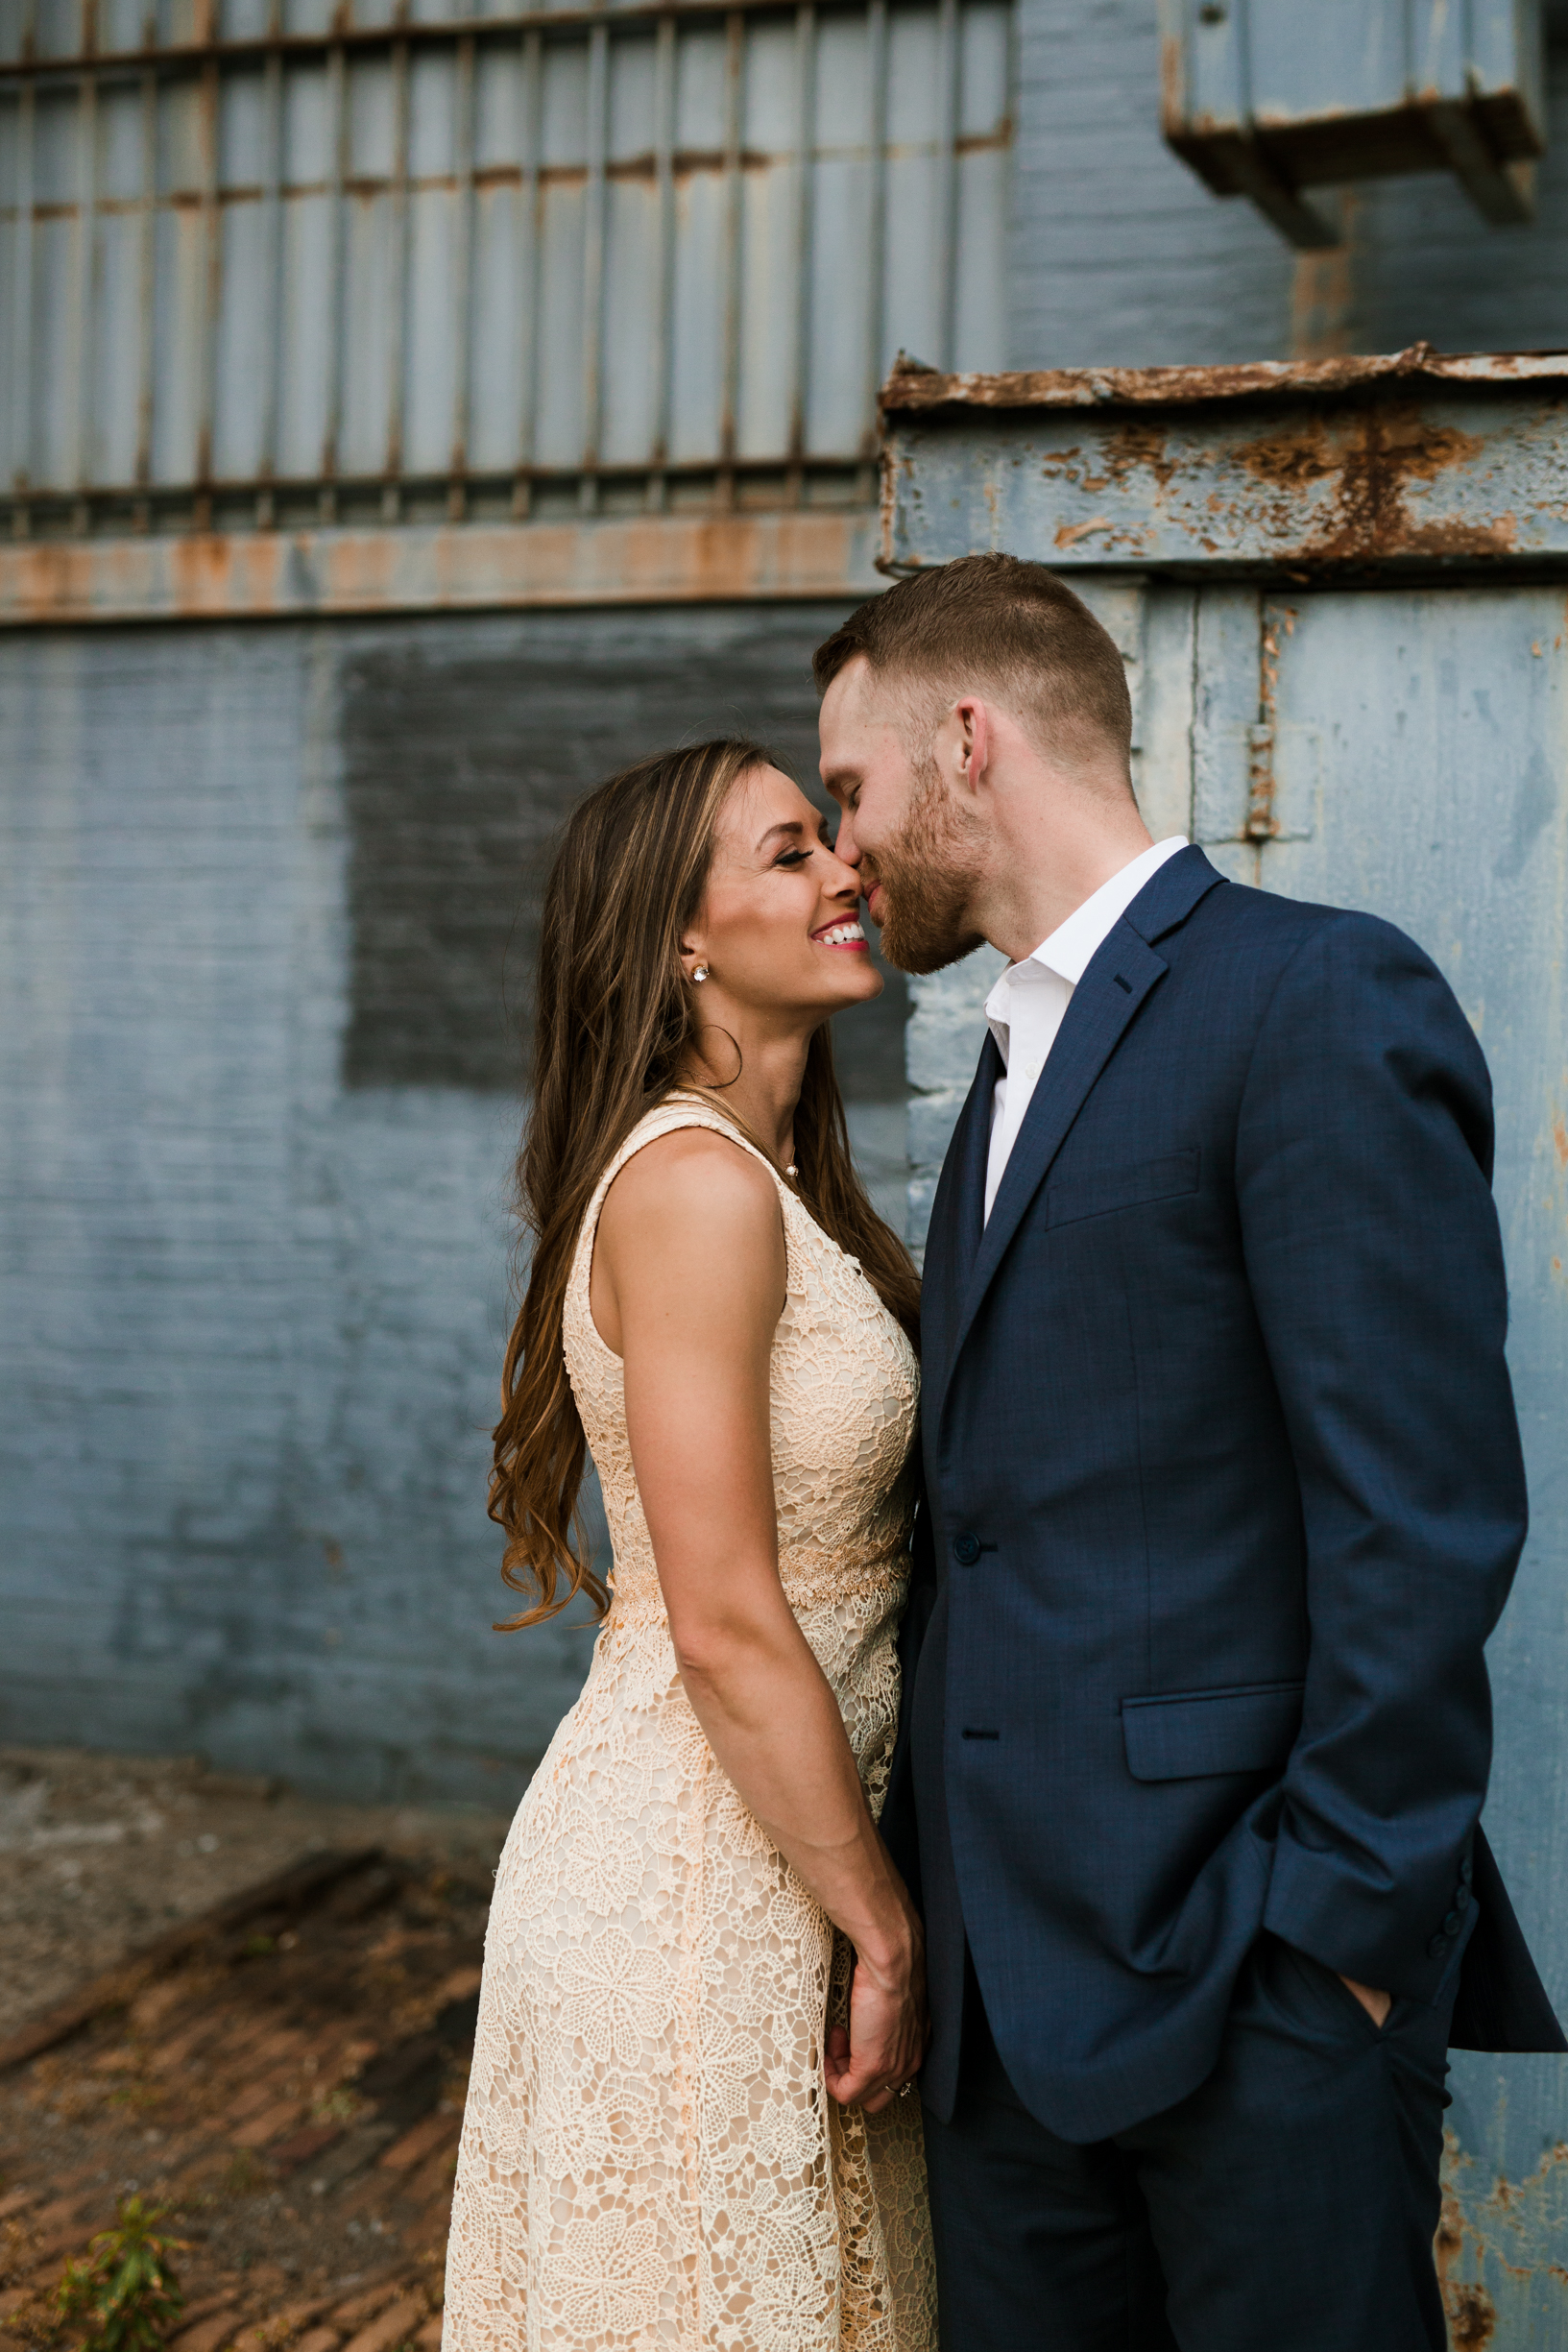 Victoria & Chad Engagement 2018 Crystal Ludwick Photo Louisville Kentucky Wedding Photographer WEBSITE (38 of 48).jpg